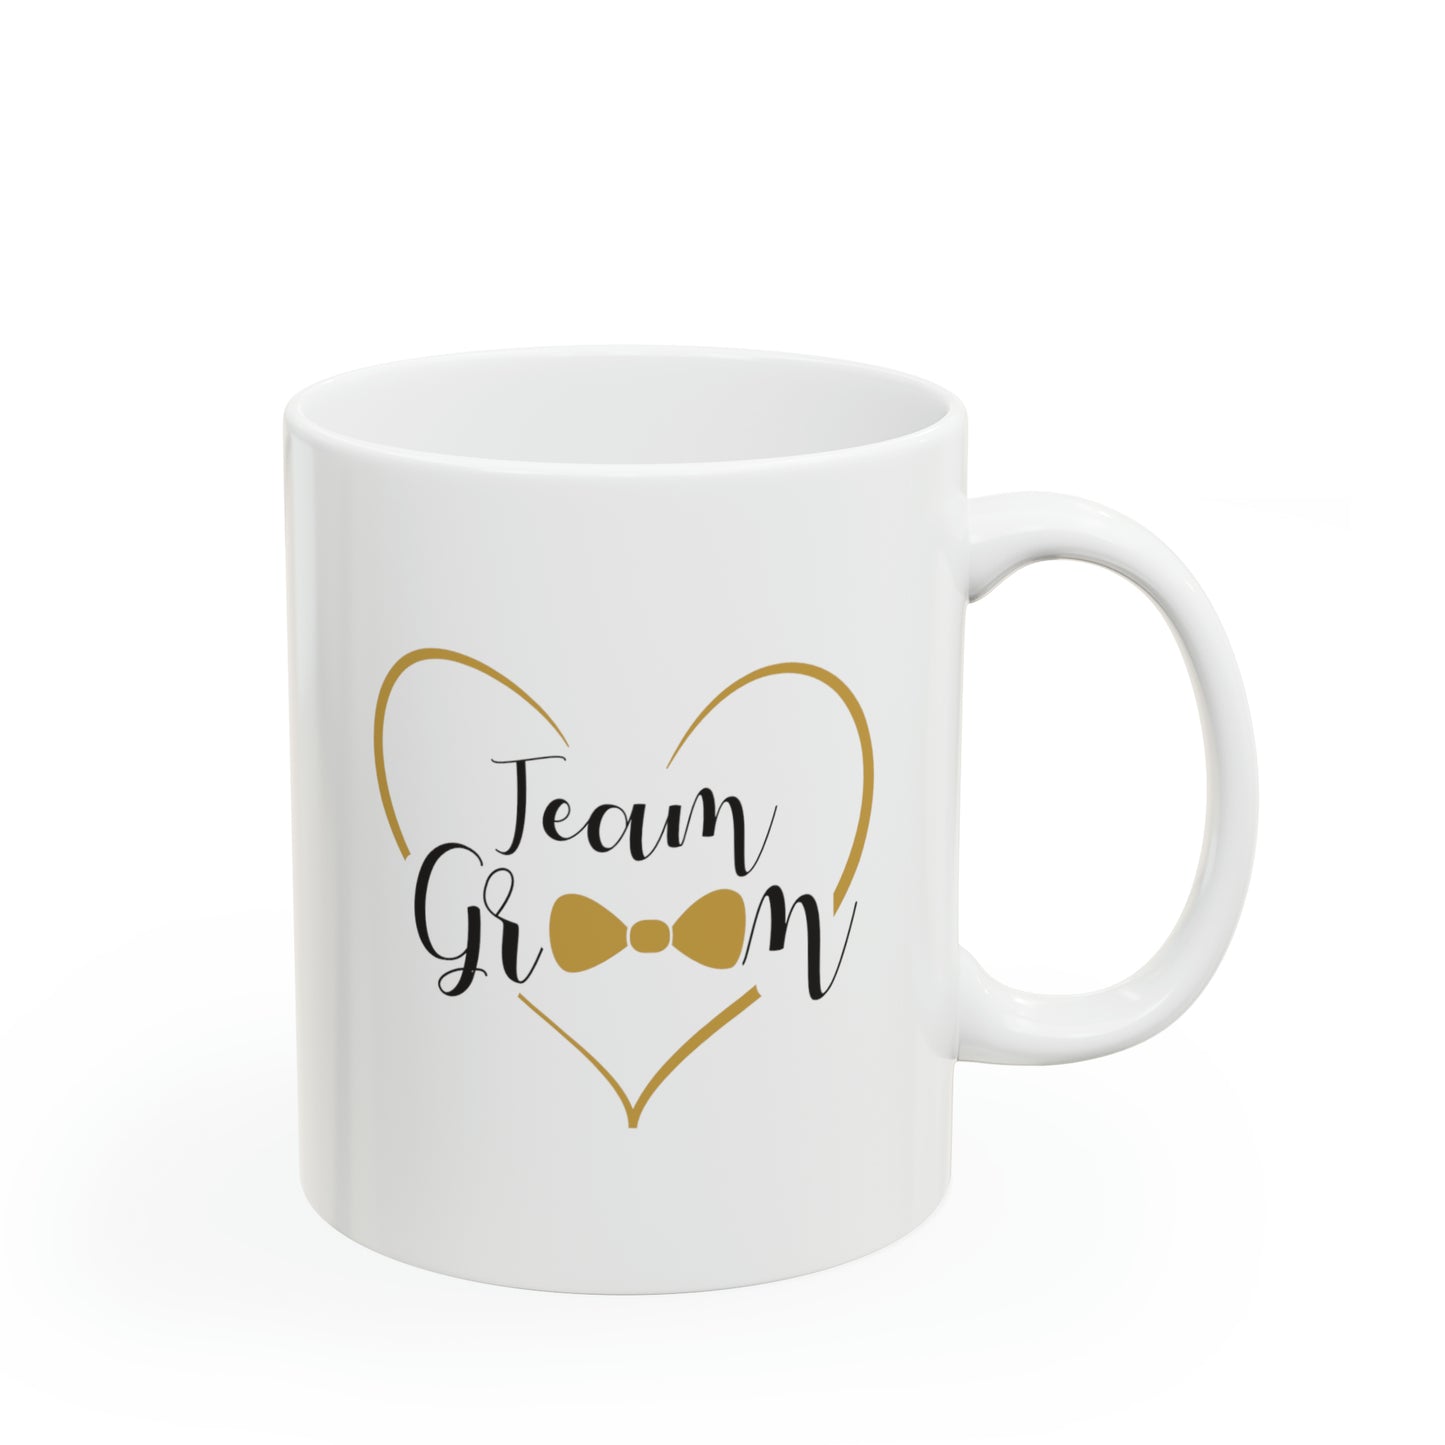 Team Groom Coffee Mug - Double Sided 11oz White Ceramic by TheGlassyLass.com